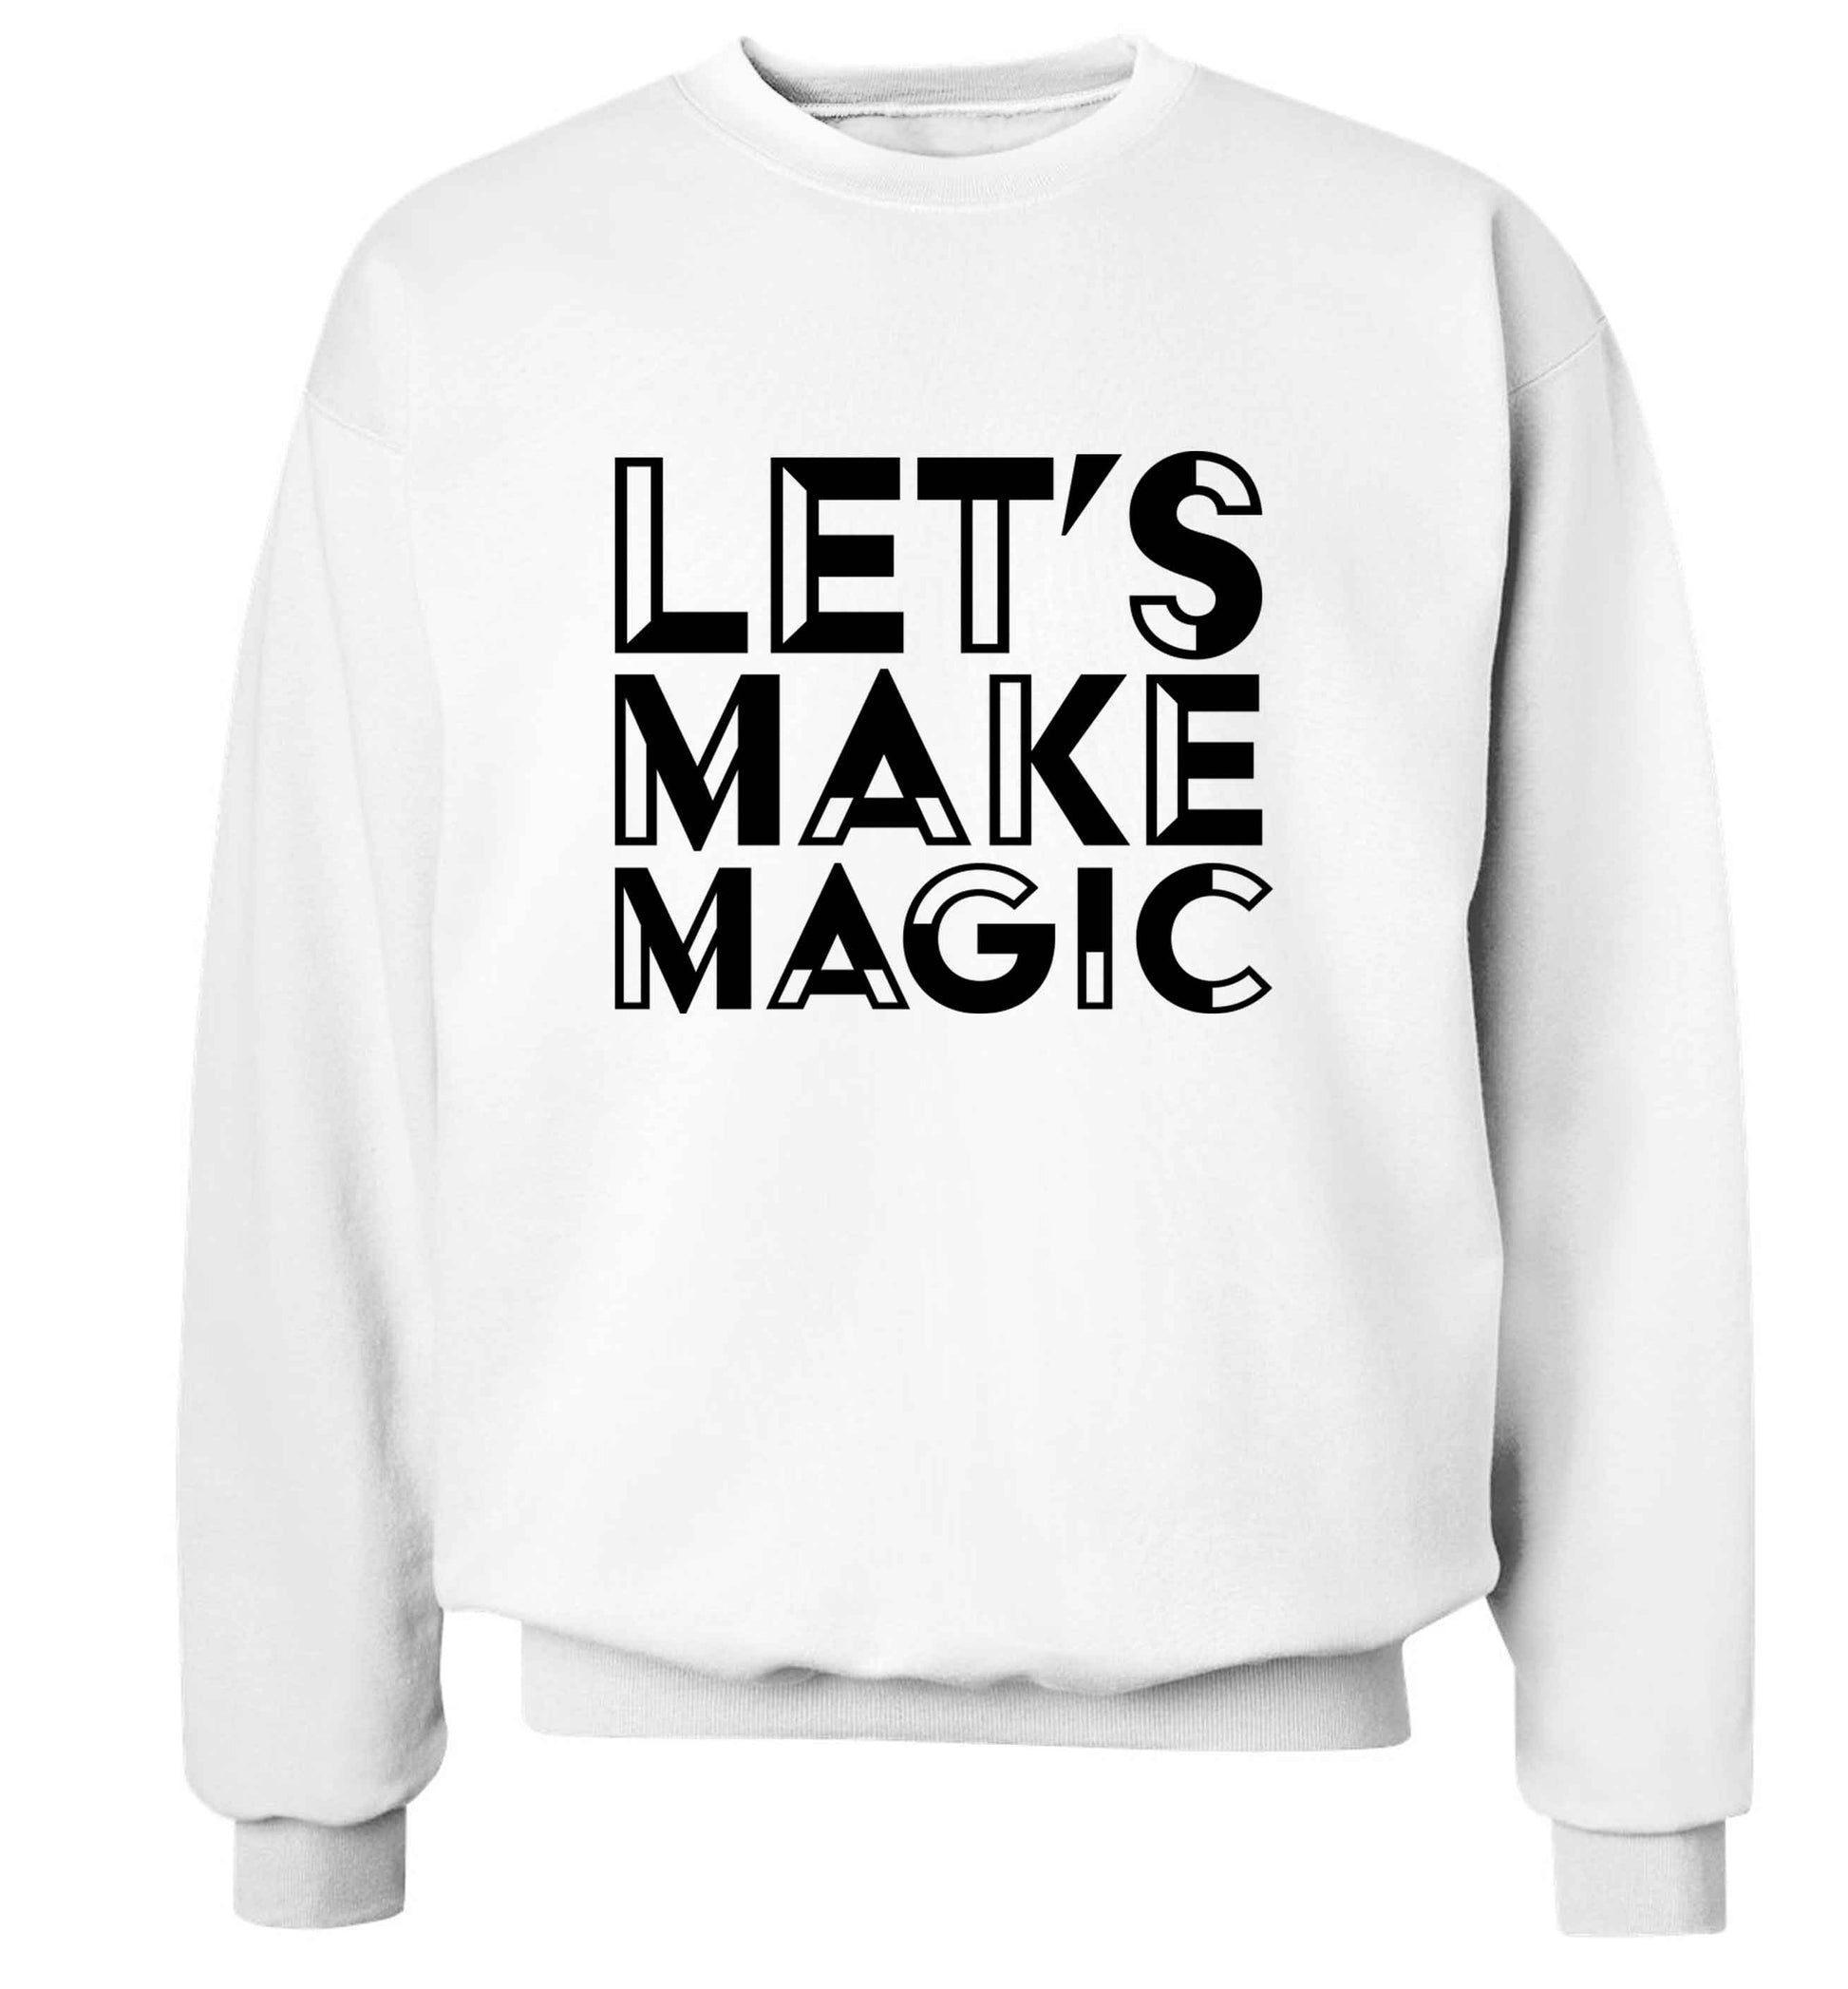 Let's make magic adult's unisex white sweater 2XL